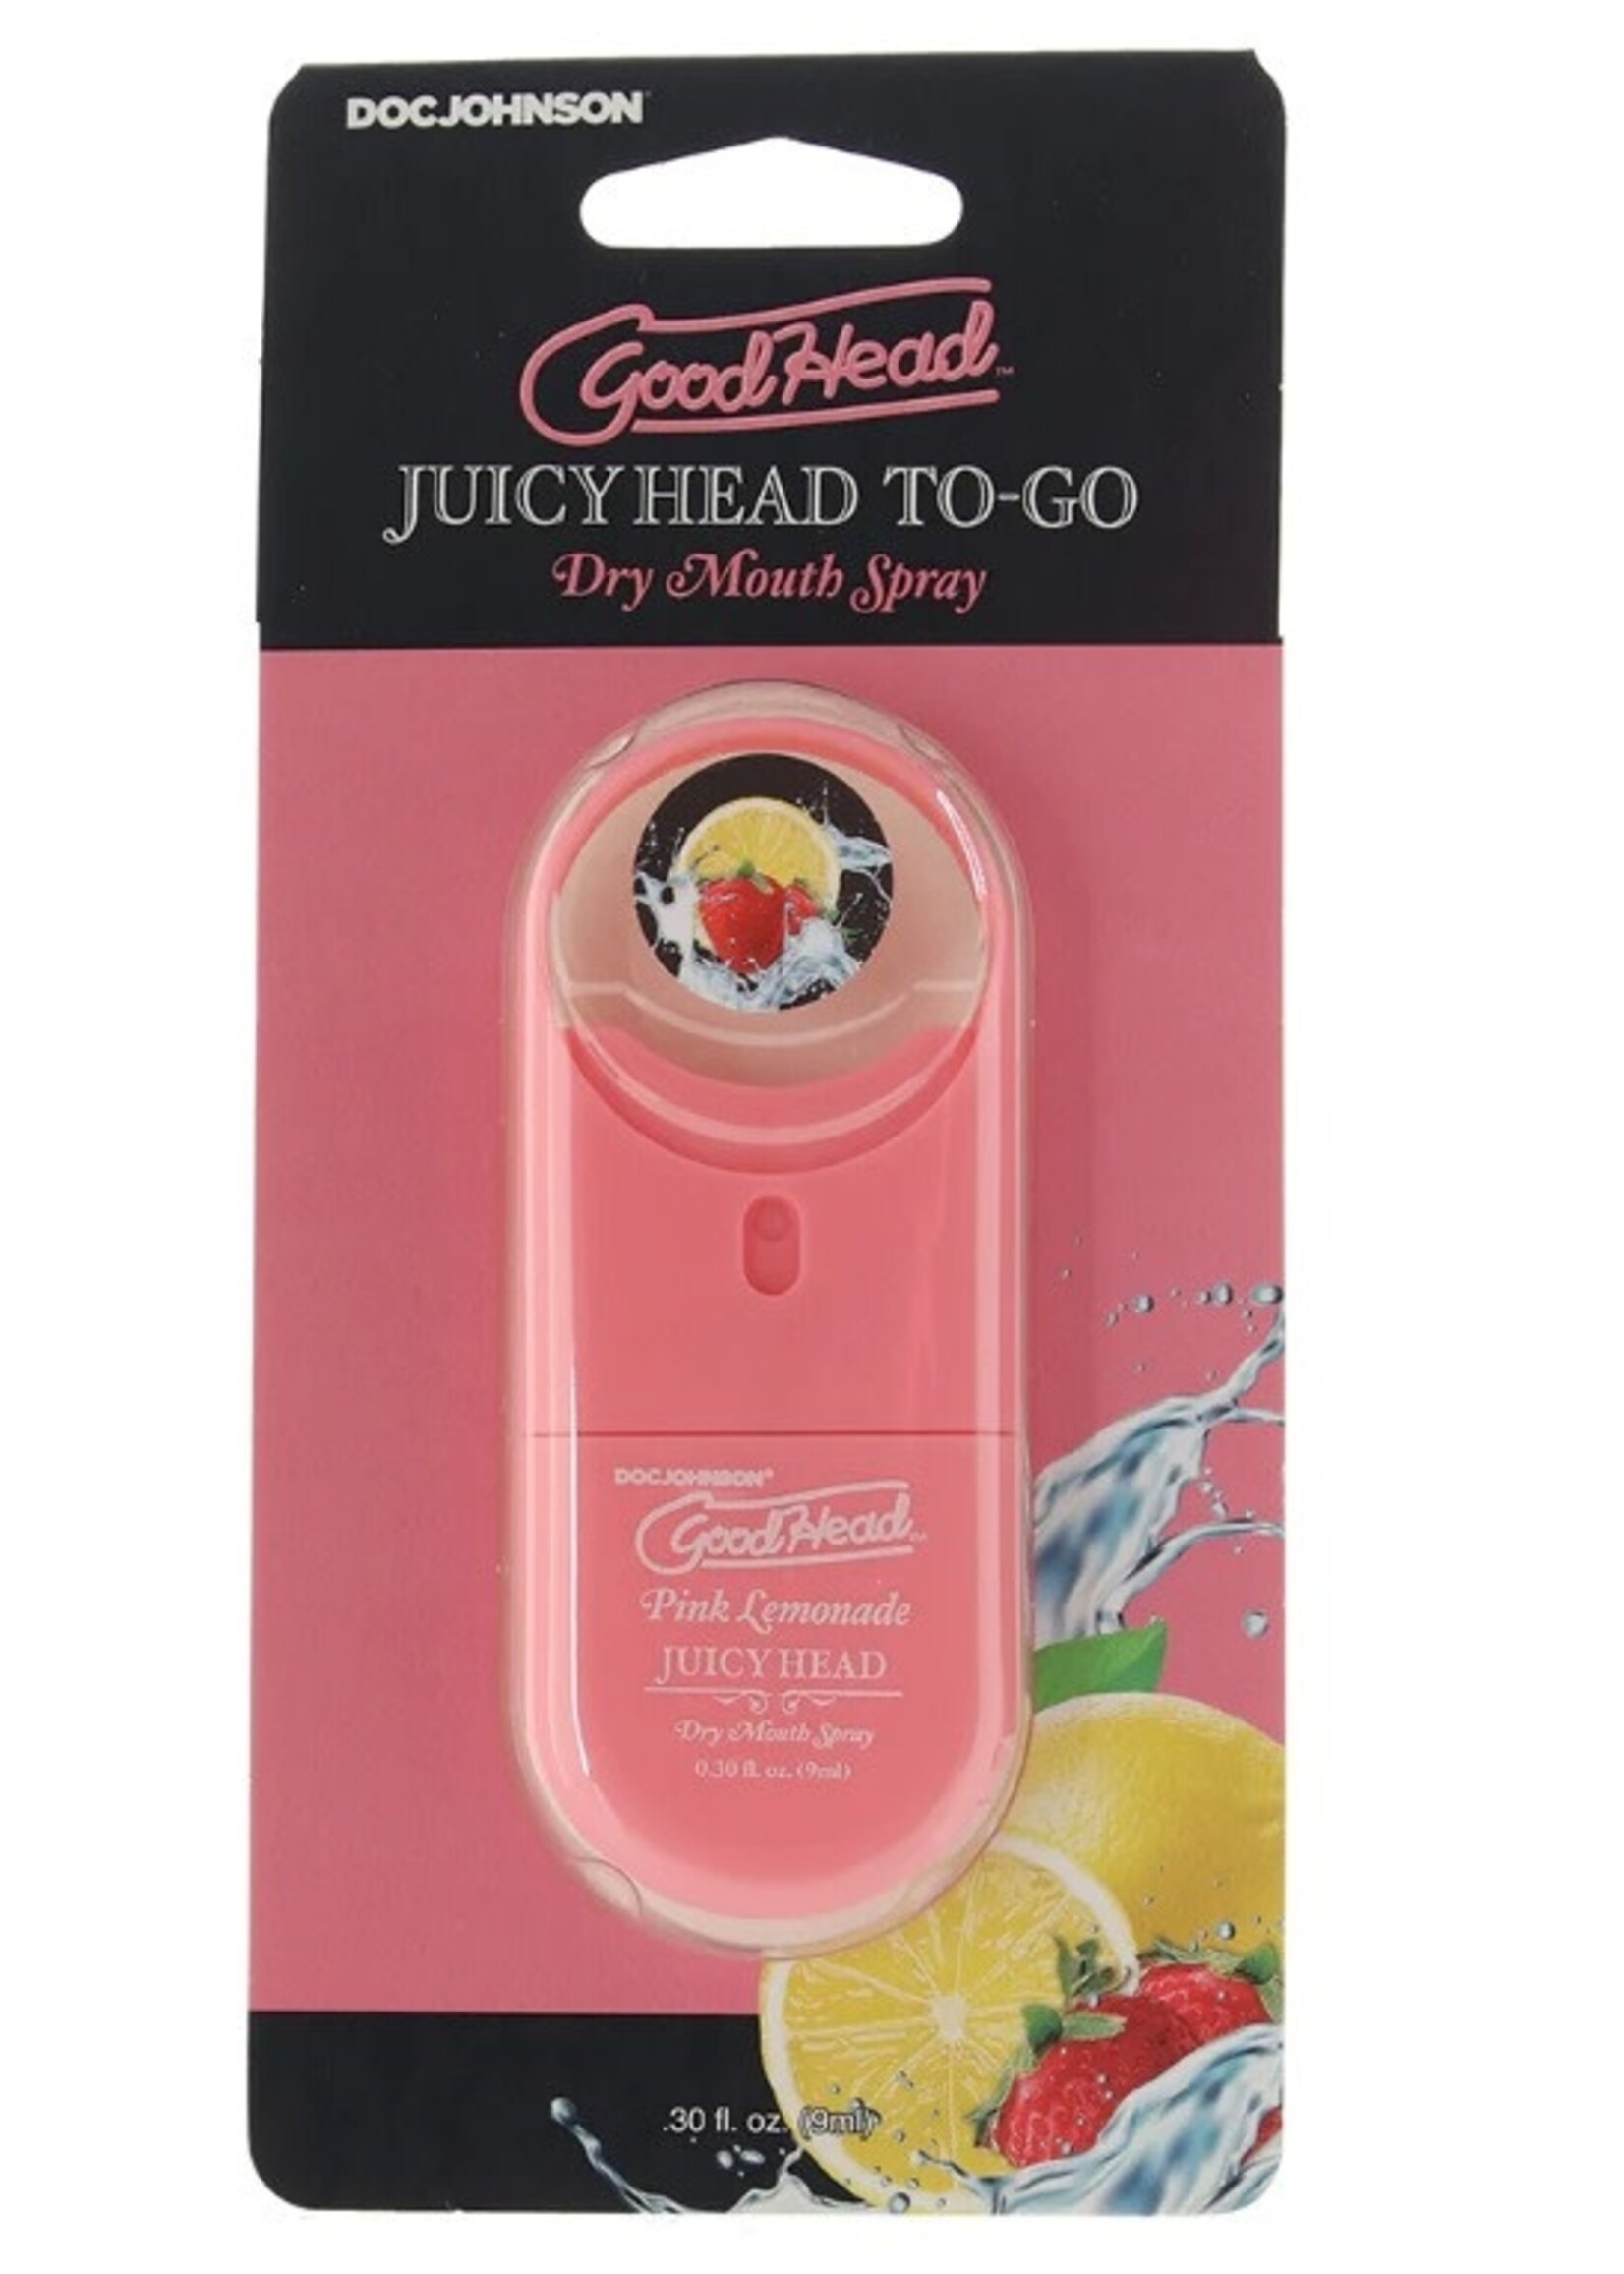 GoodHead Juicy Head Dry Mouth Spray To-Go in Pink Lemonade